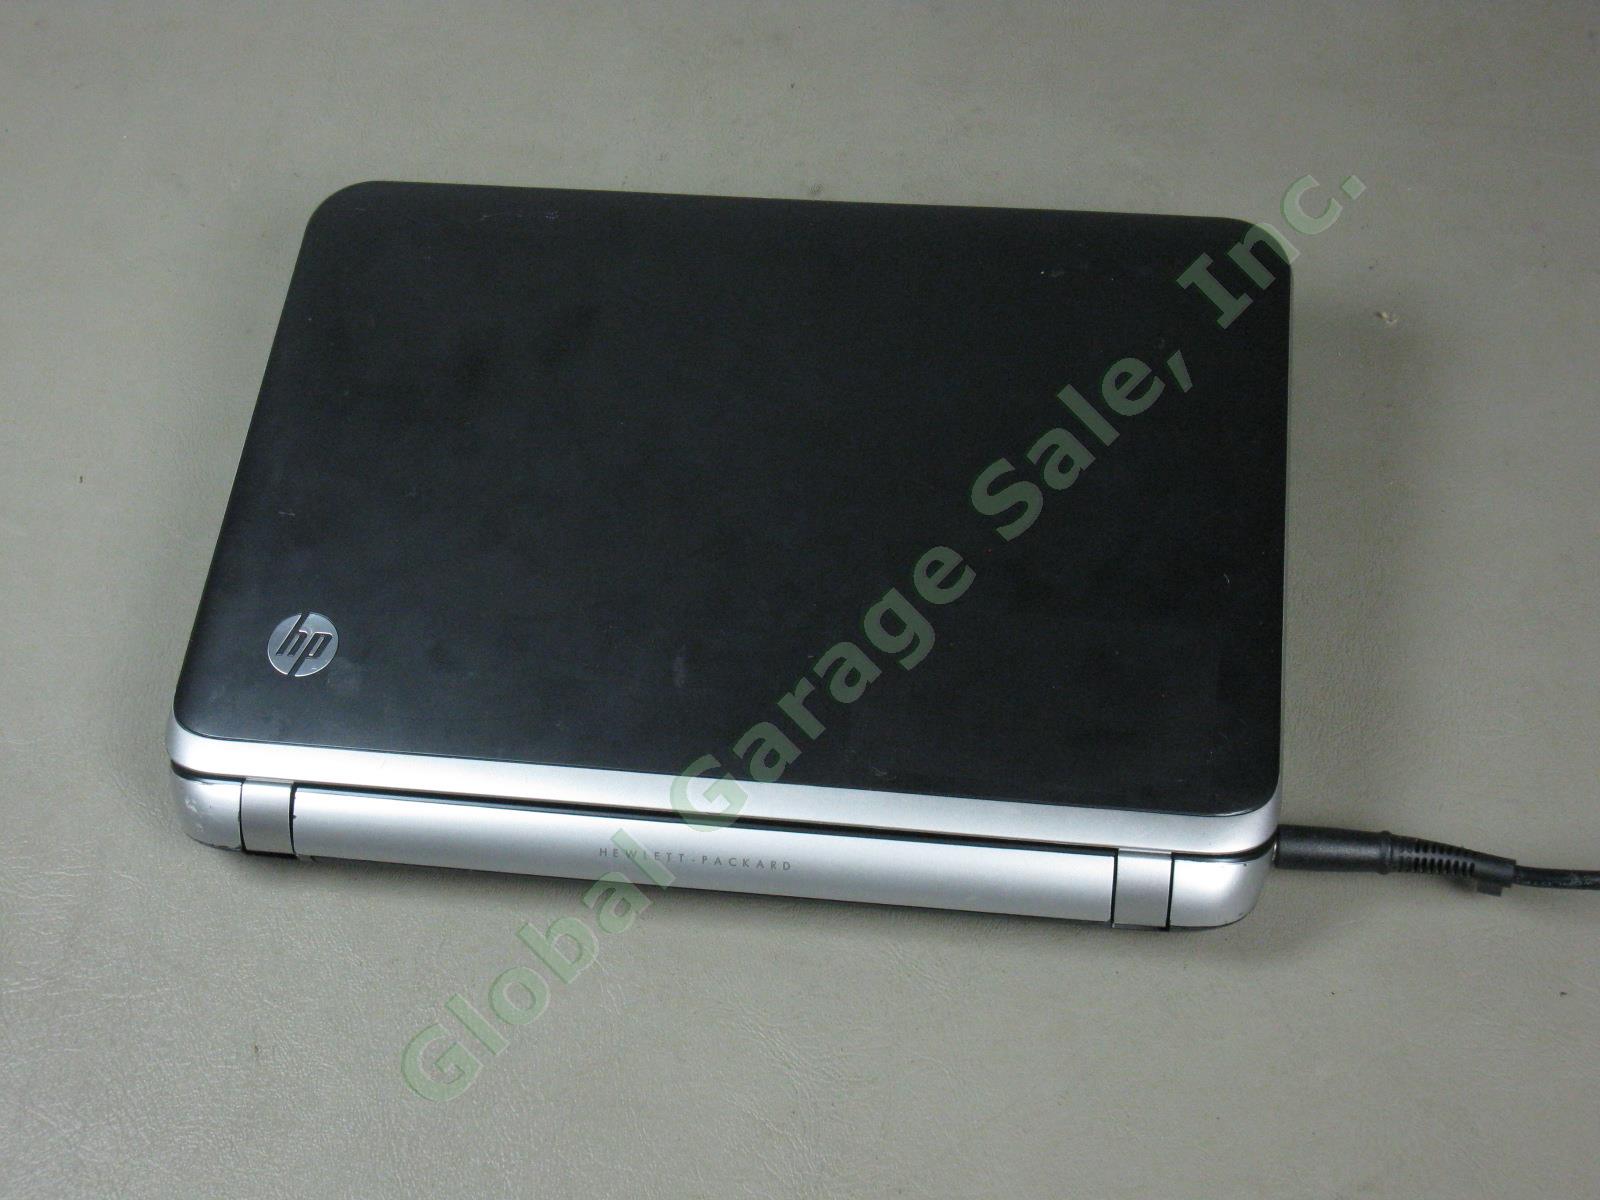 HP 3115m Notebook Laptop Computer AMD E-450 1.65GHz 4GB 320GB Windows 7 Ult NR! 3